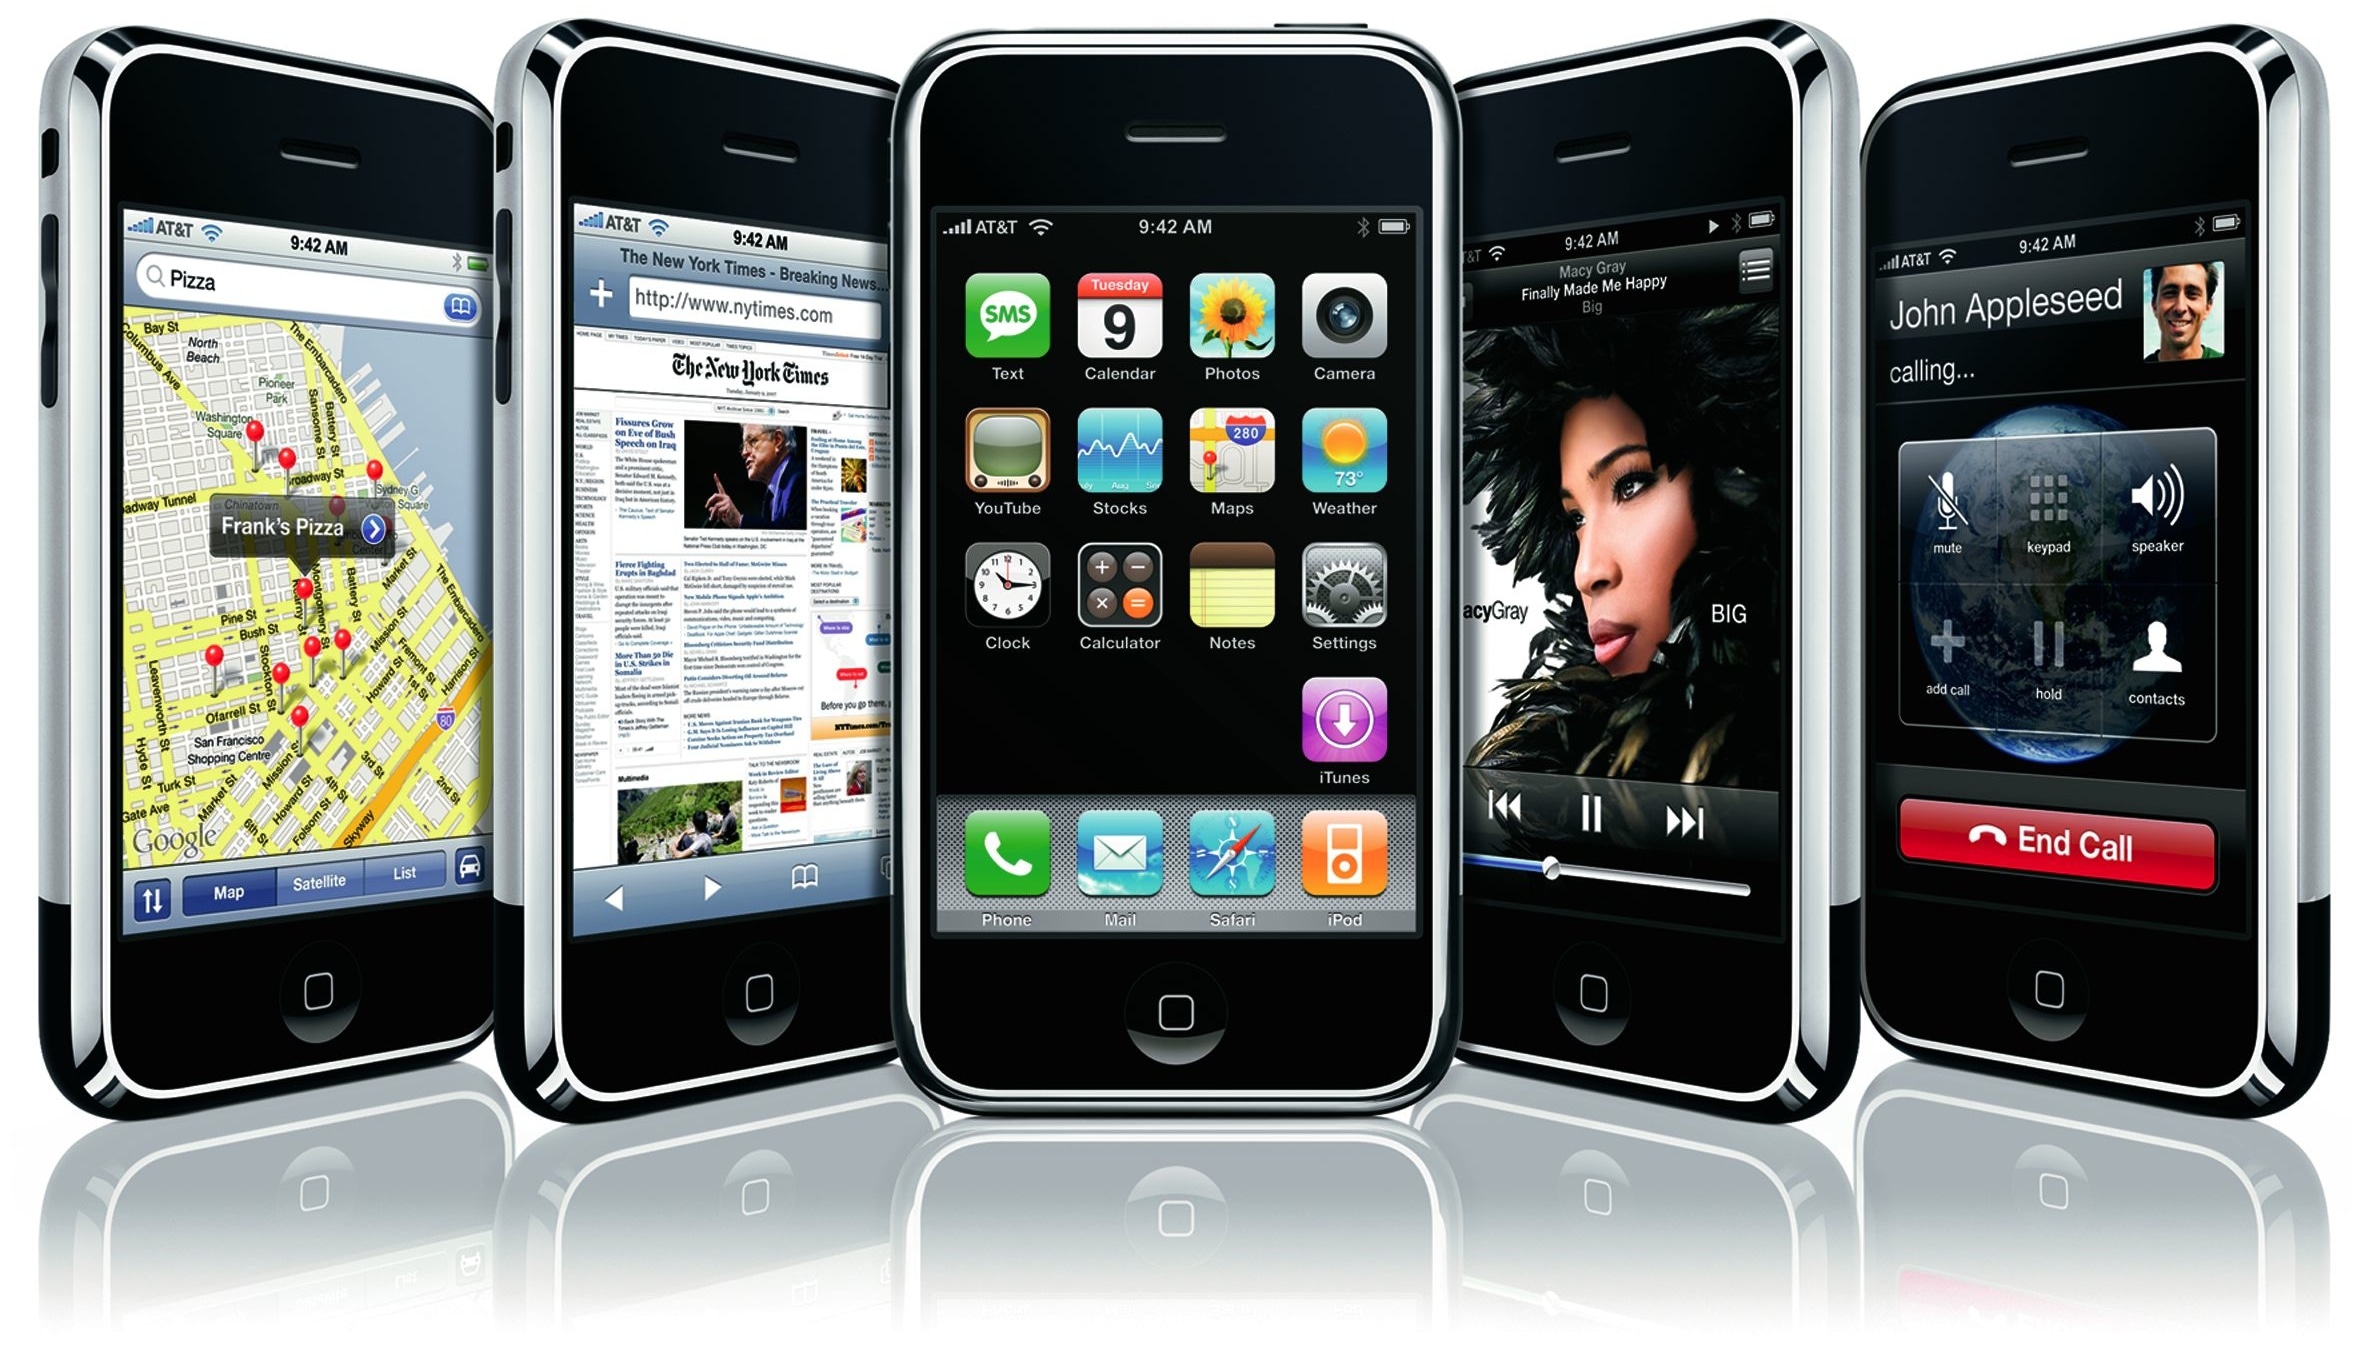 Promotional image of original iPhone